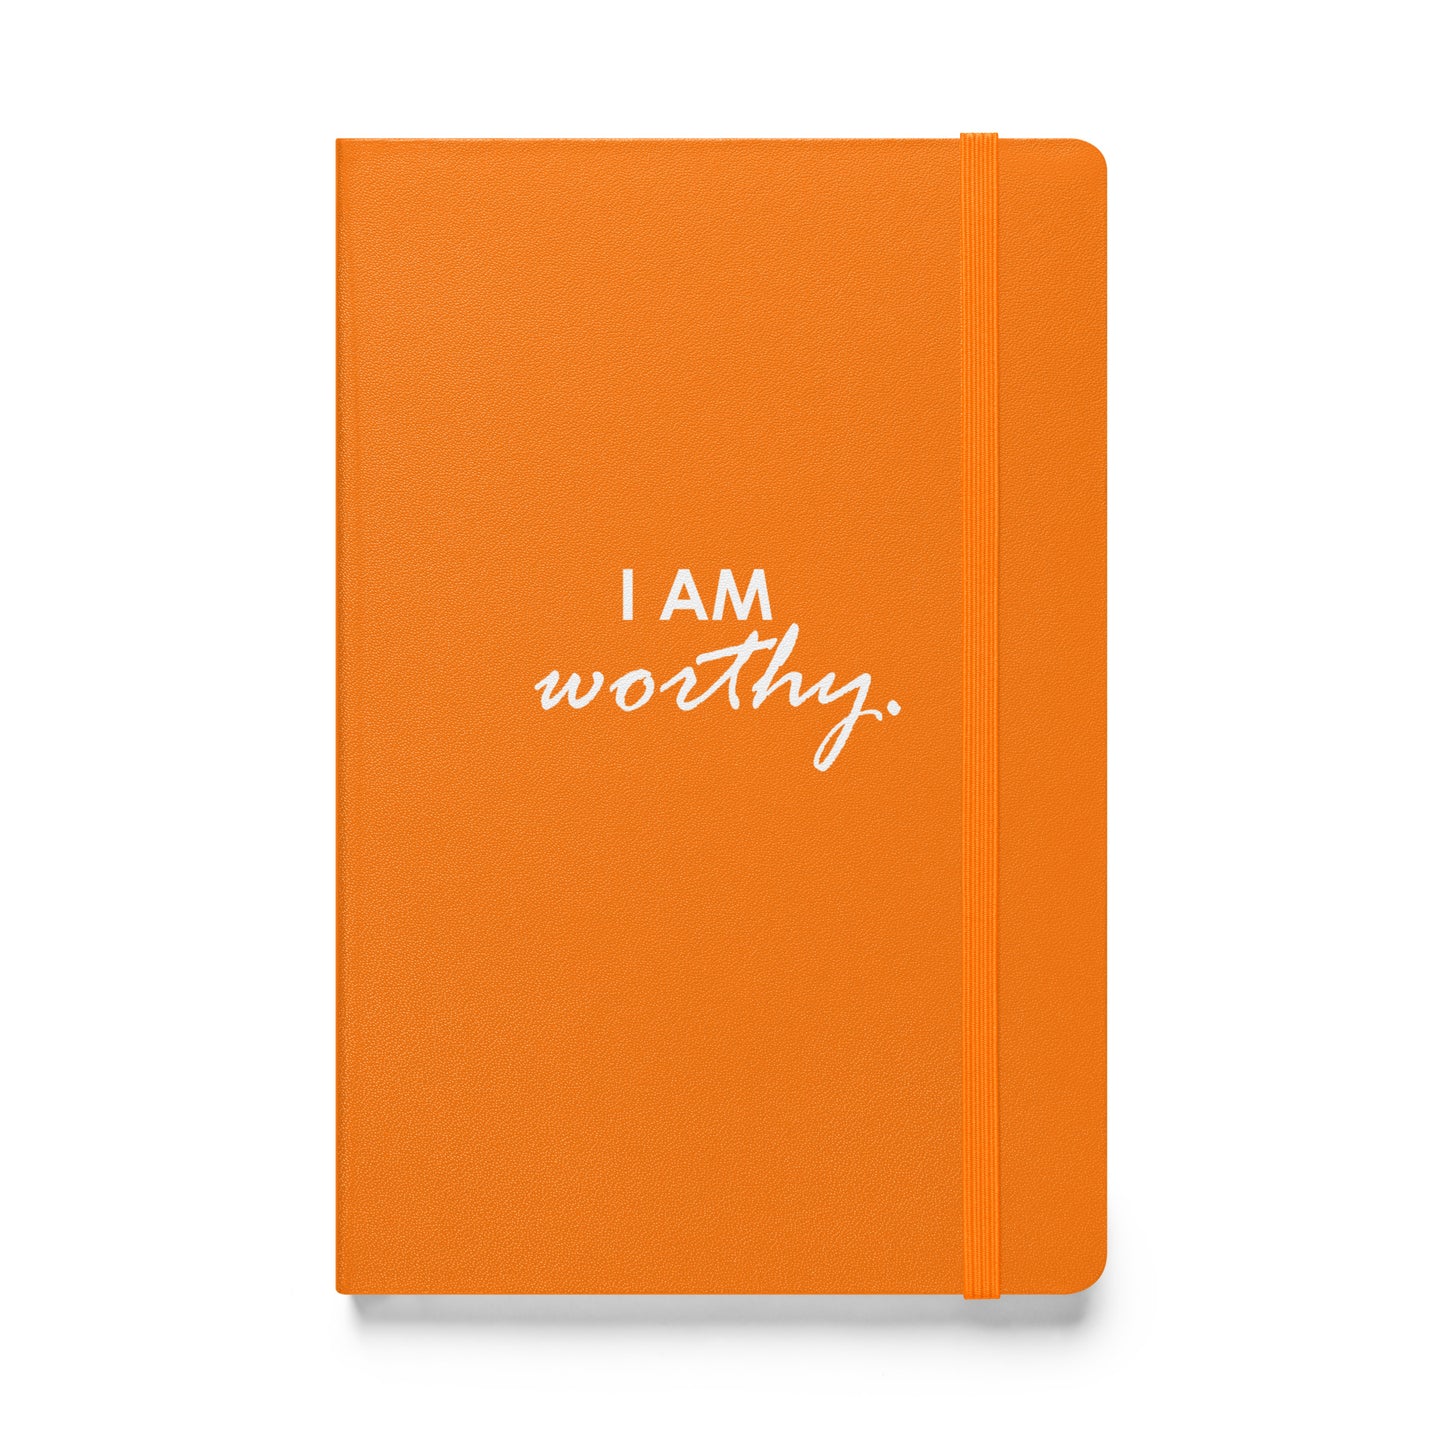 I AM WORTHY - Hardcover bound notebook & FREE Affirmation Digital Download